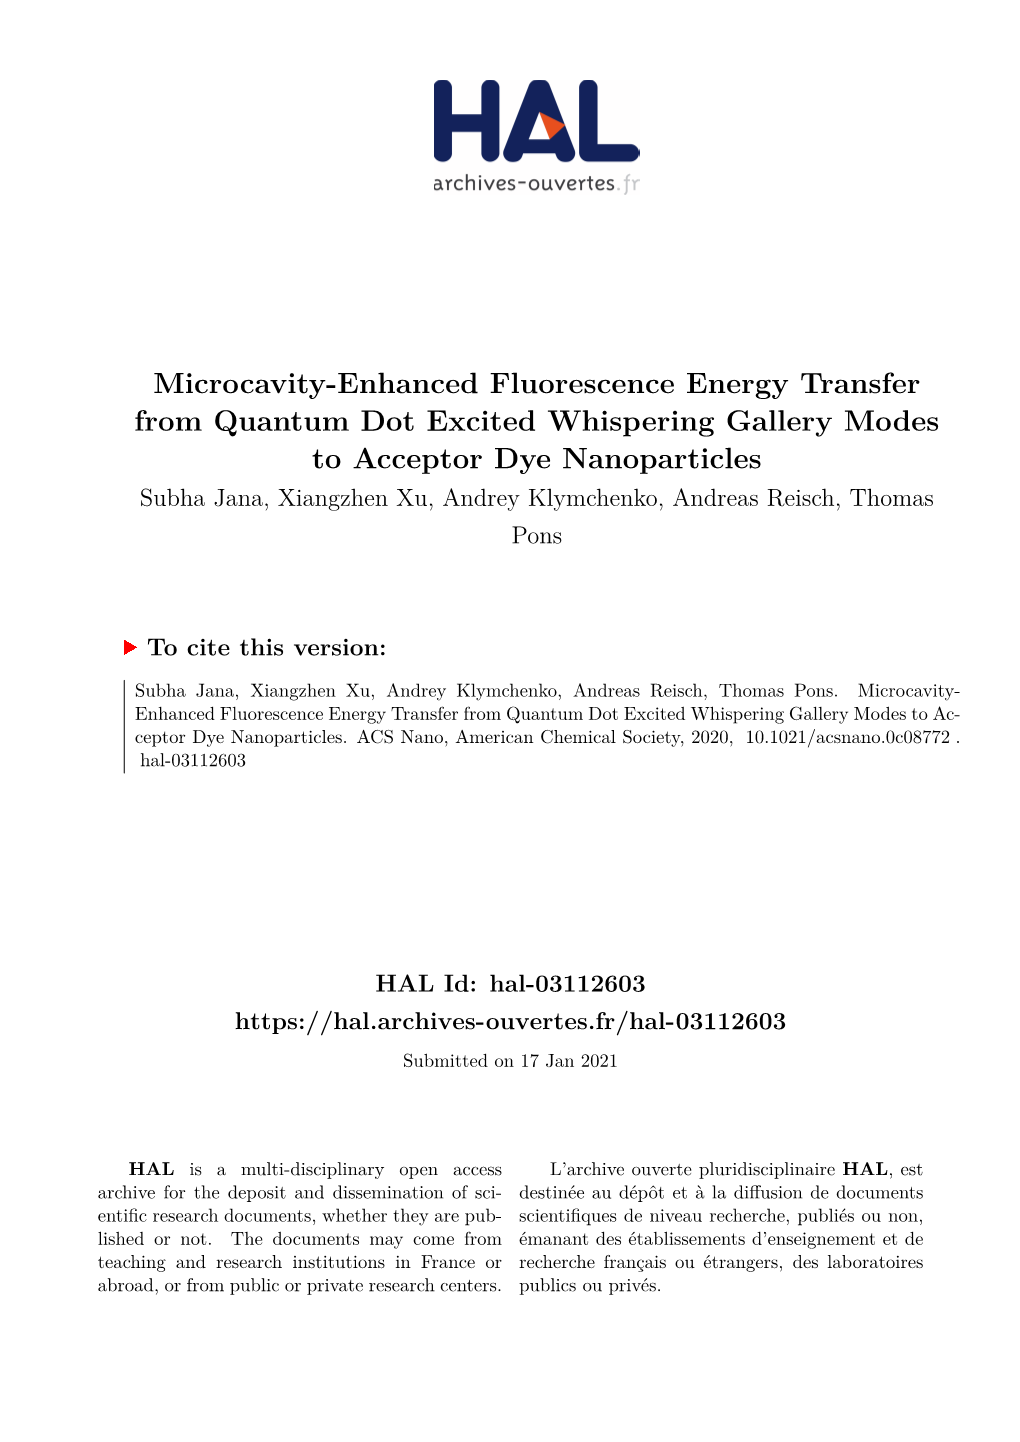 Microcavity-Enhanced Fluorescence Energy Transfer from Quantum Dot